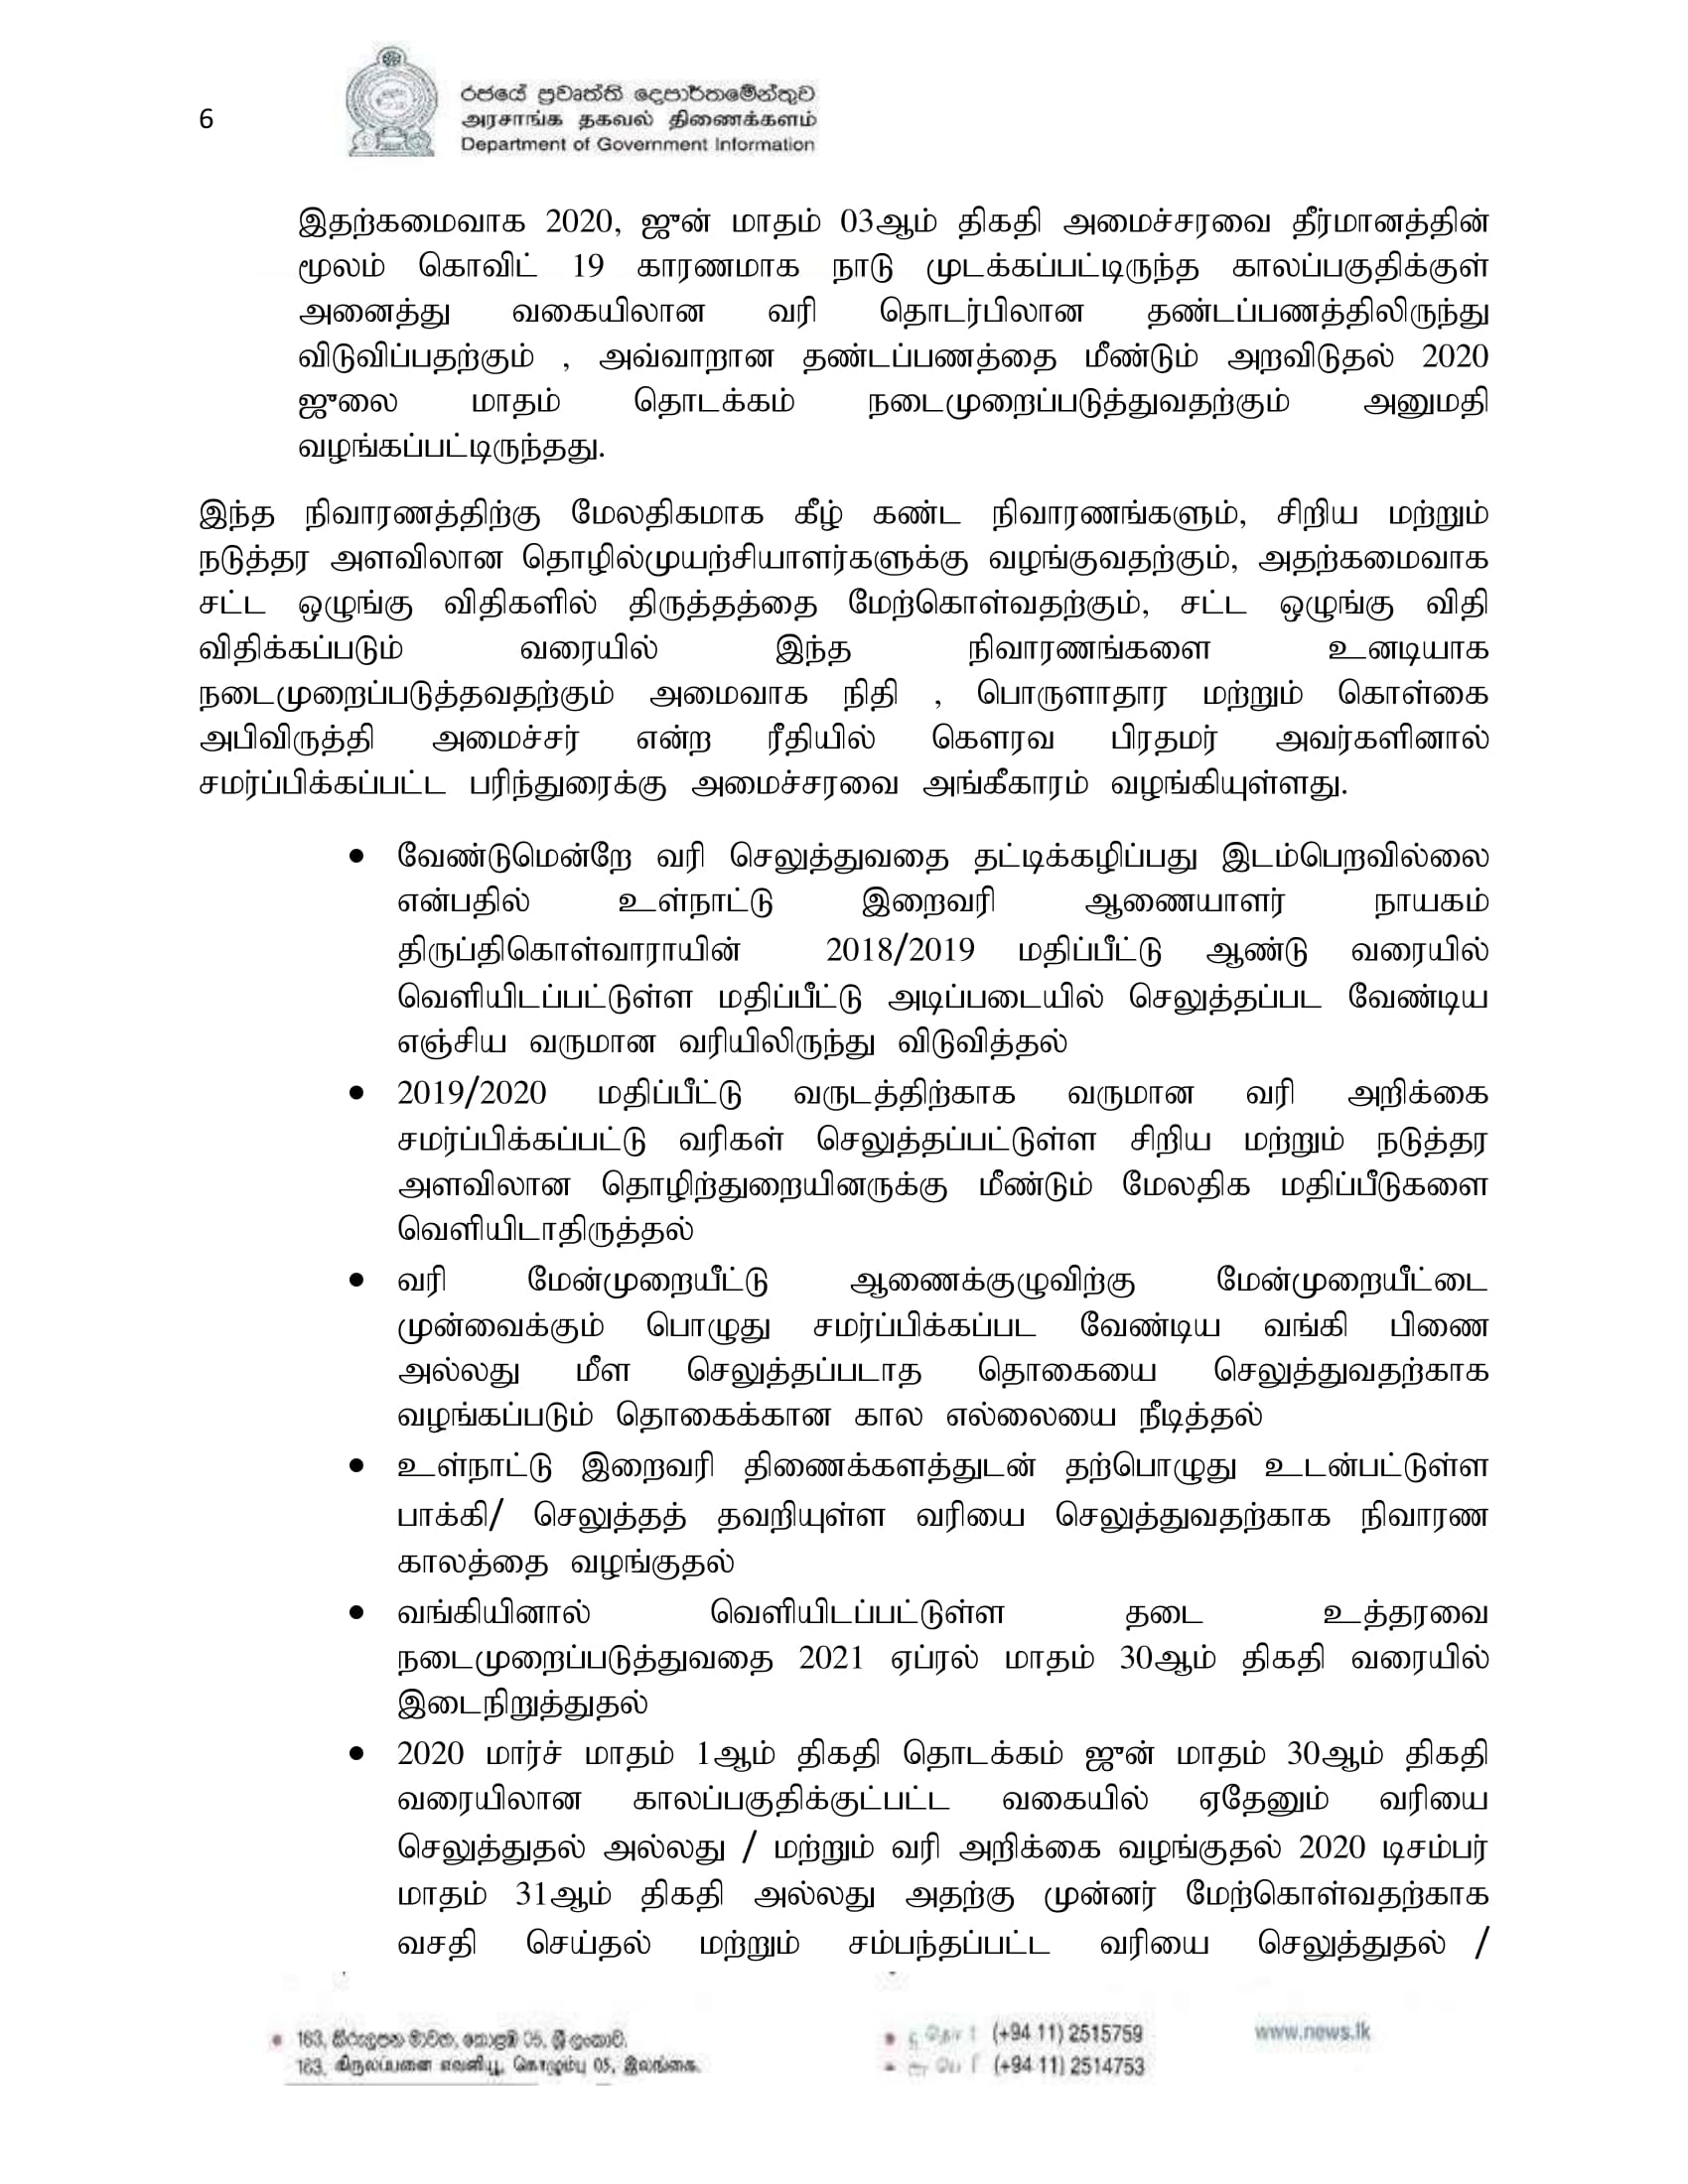 2020.06.24 Cabinet Tamil 1 1 6